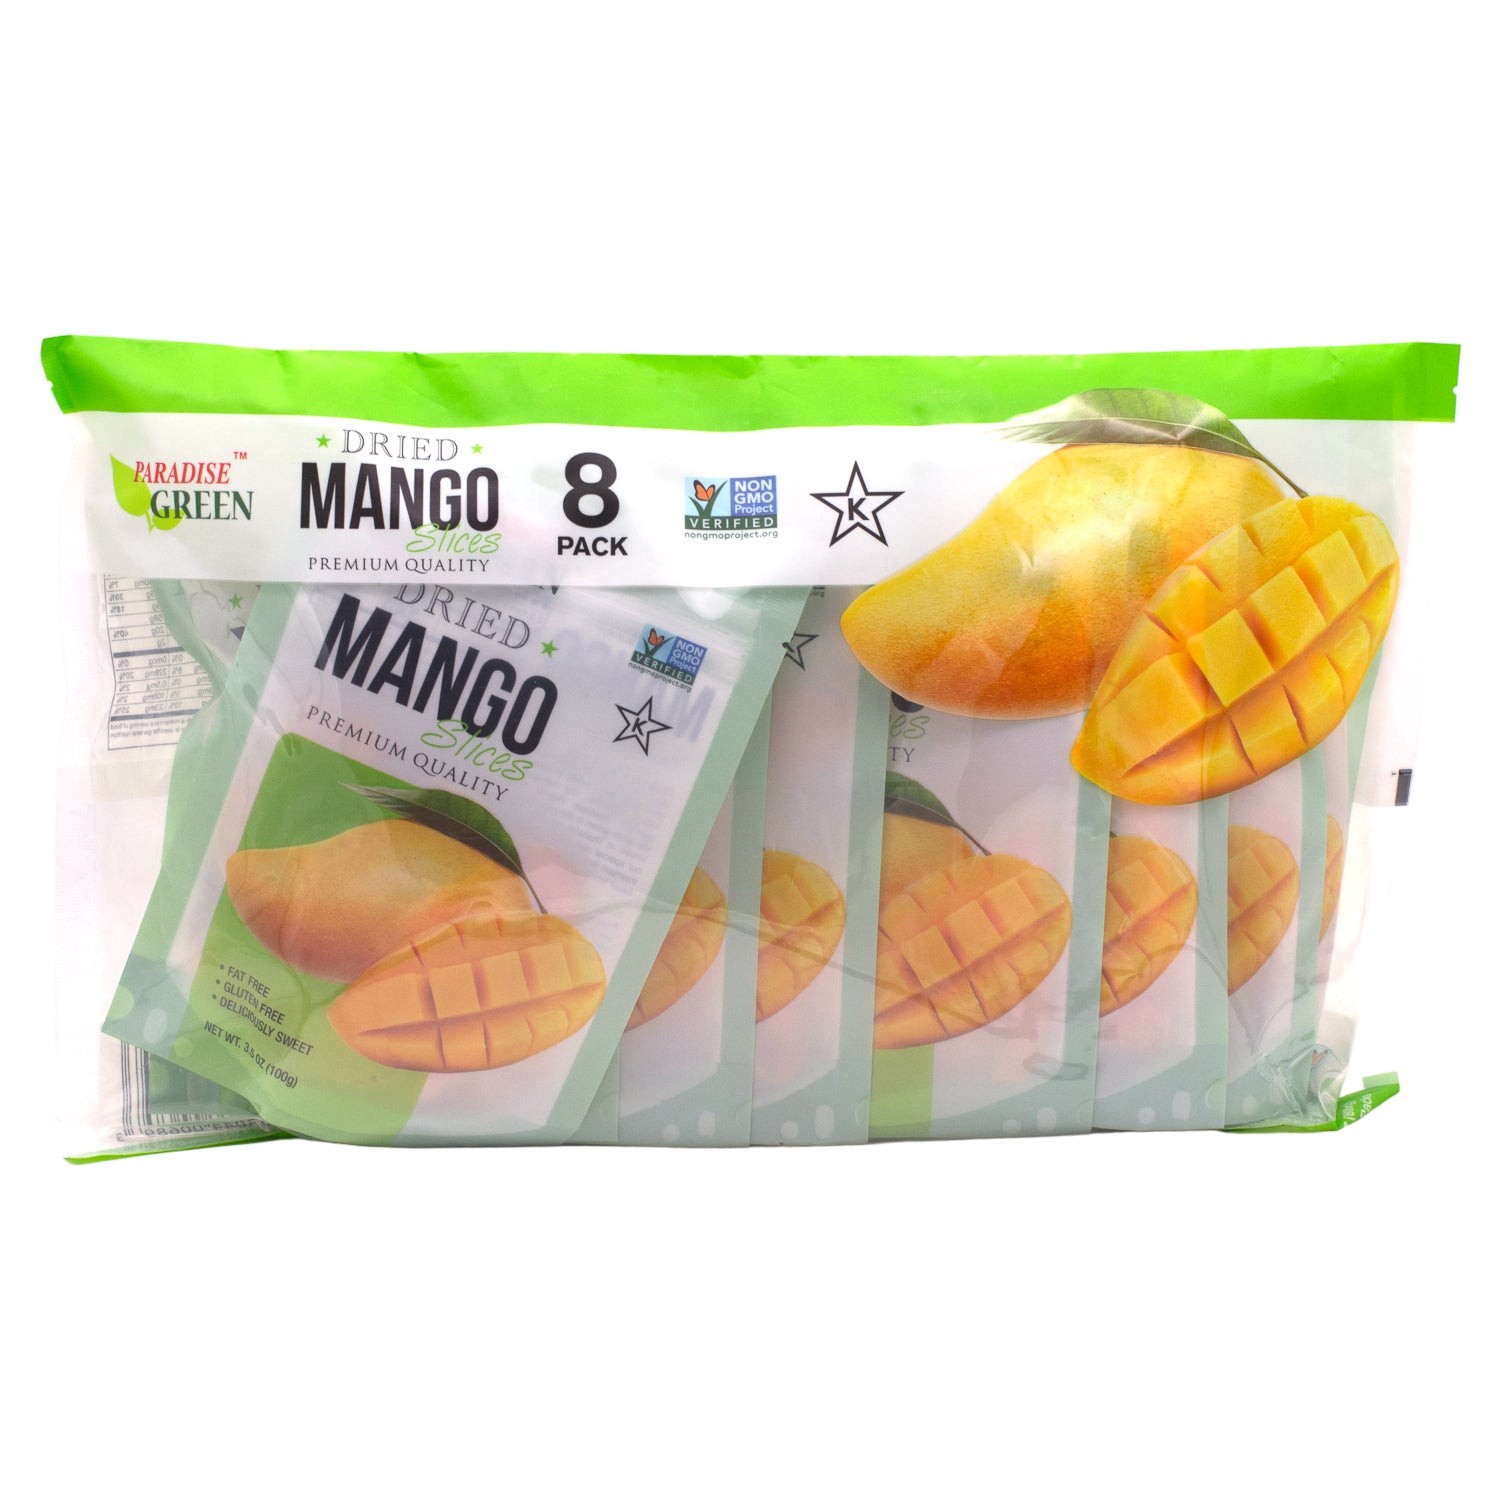 Paradise Green Premium Dried Mango Paradise Green Original 3.5 Oz-8 Count 